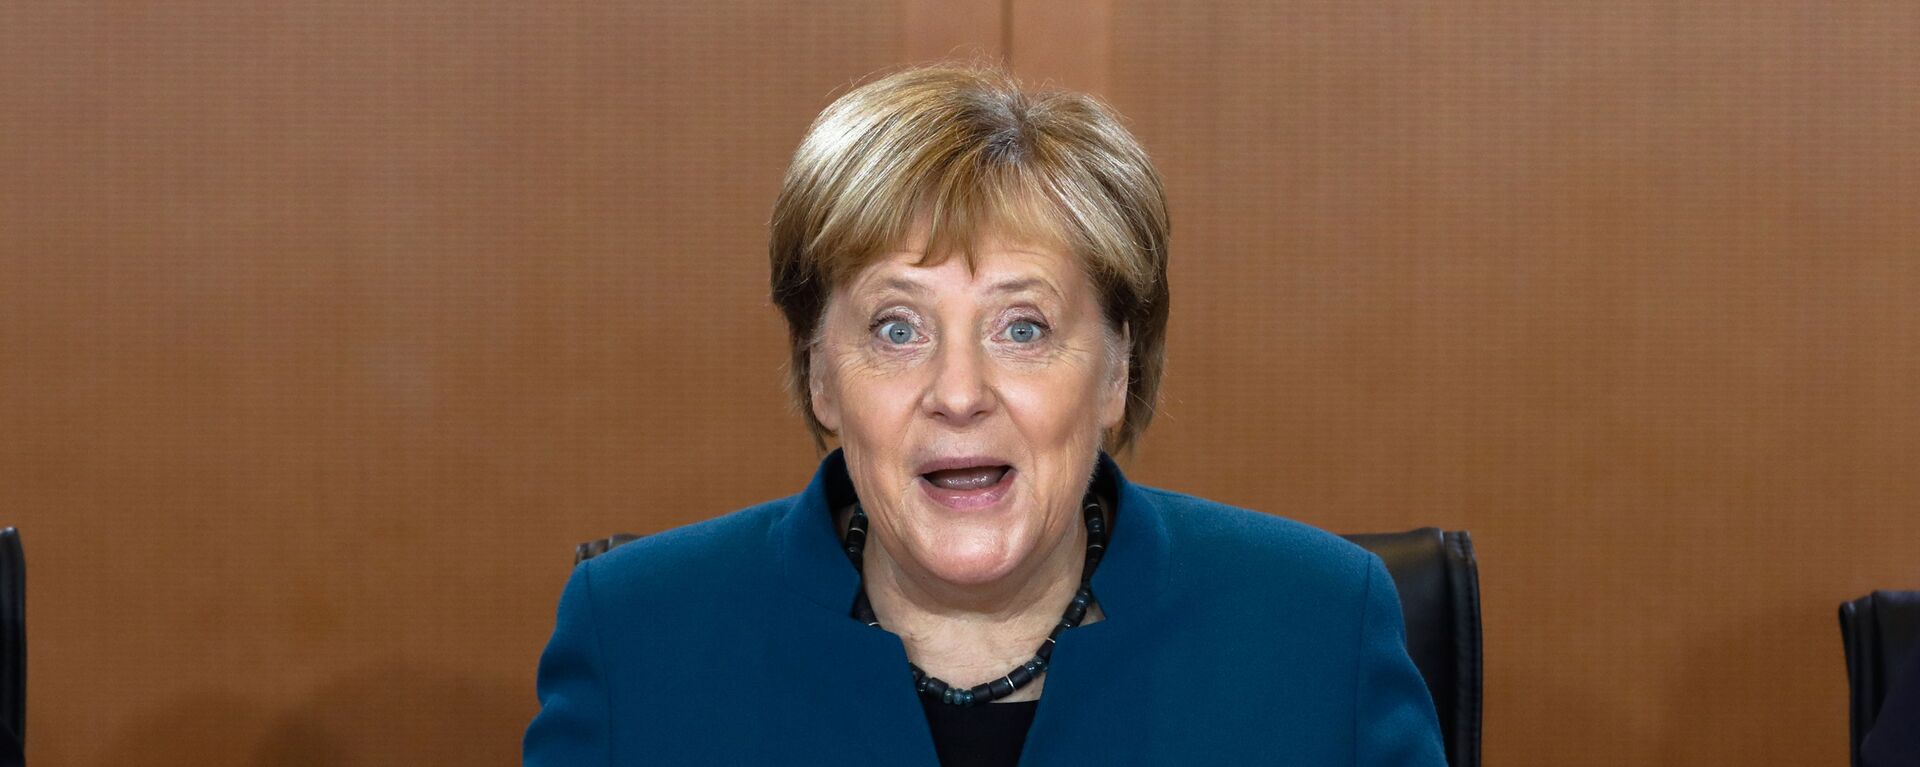 Angela Merkel - Sputnik Srbija, 1920, 28.09.2021